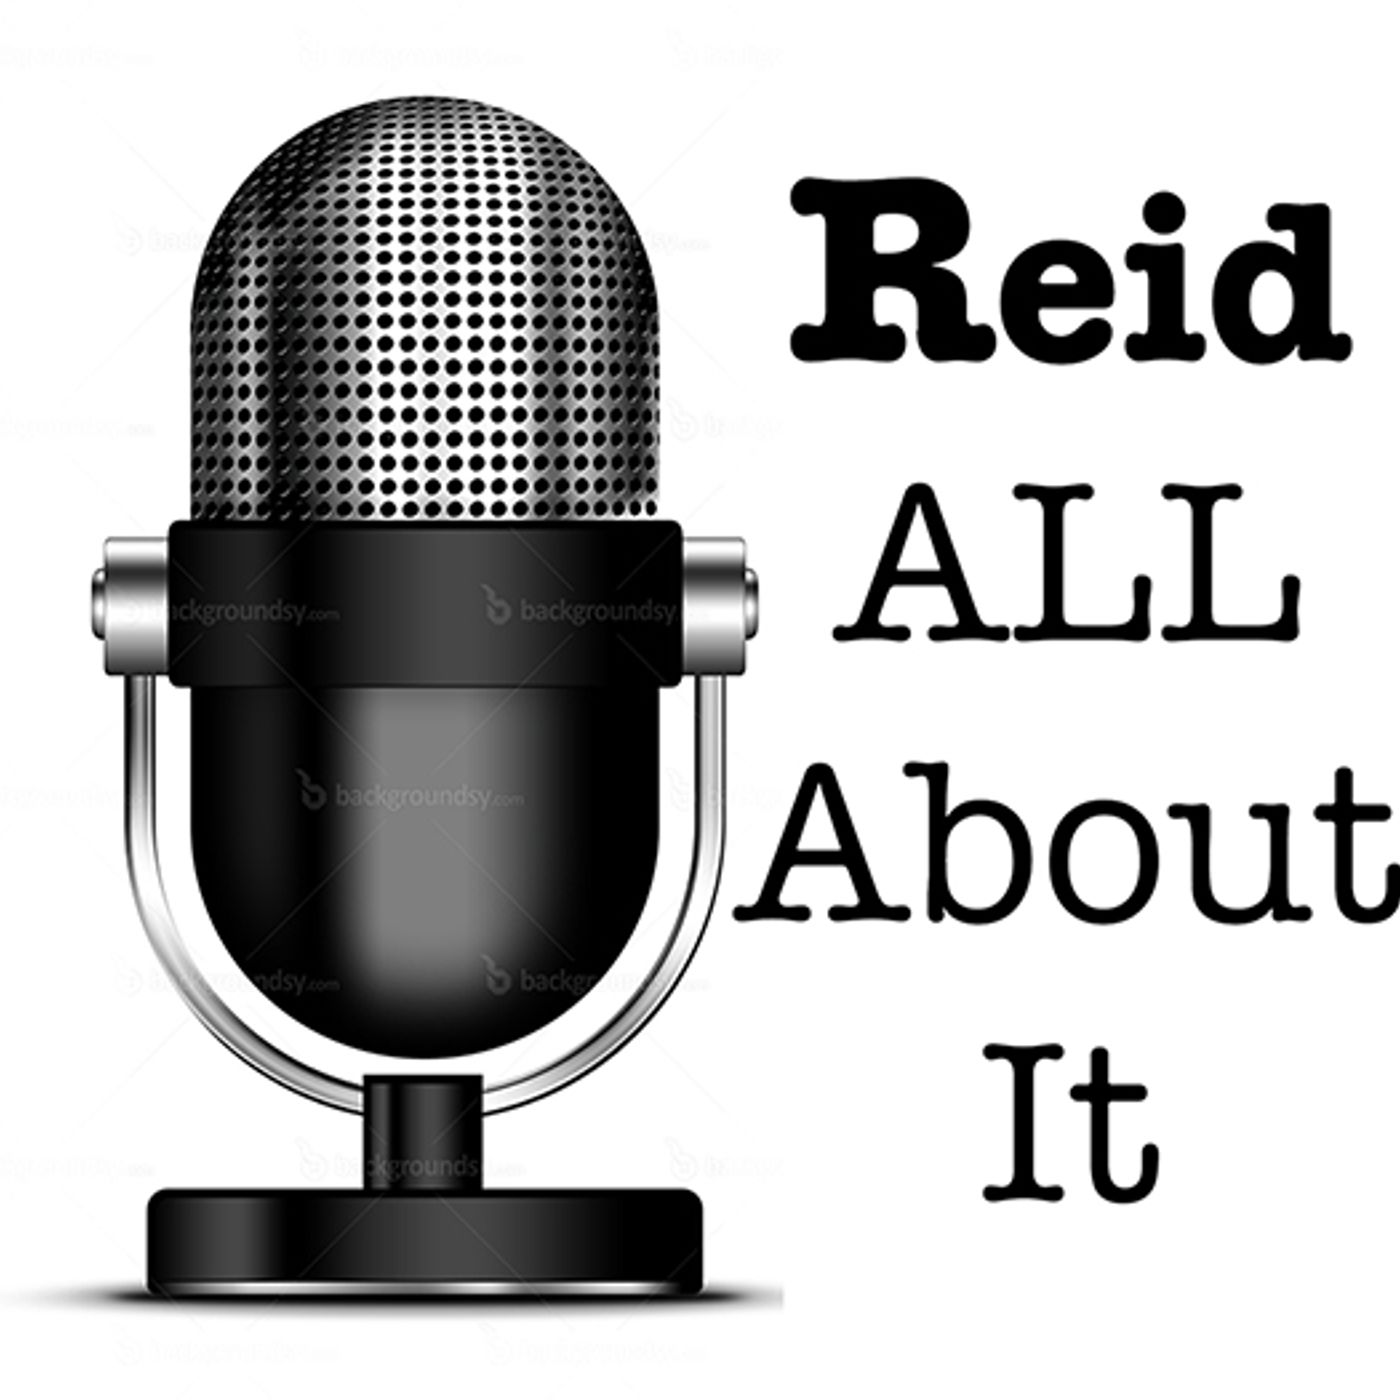 Reid ALL About It-Jim Pfiffer-Chemung River Friends